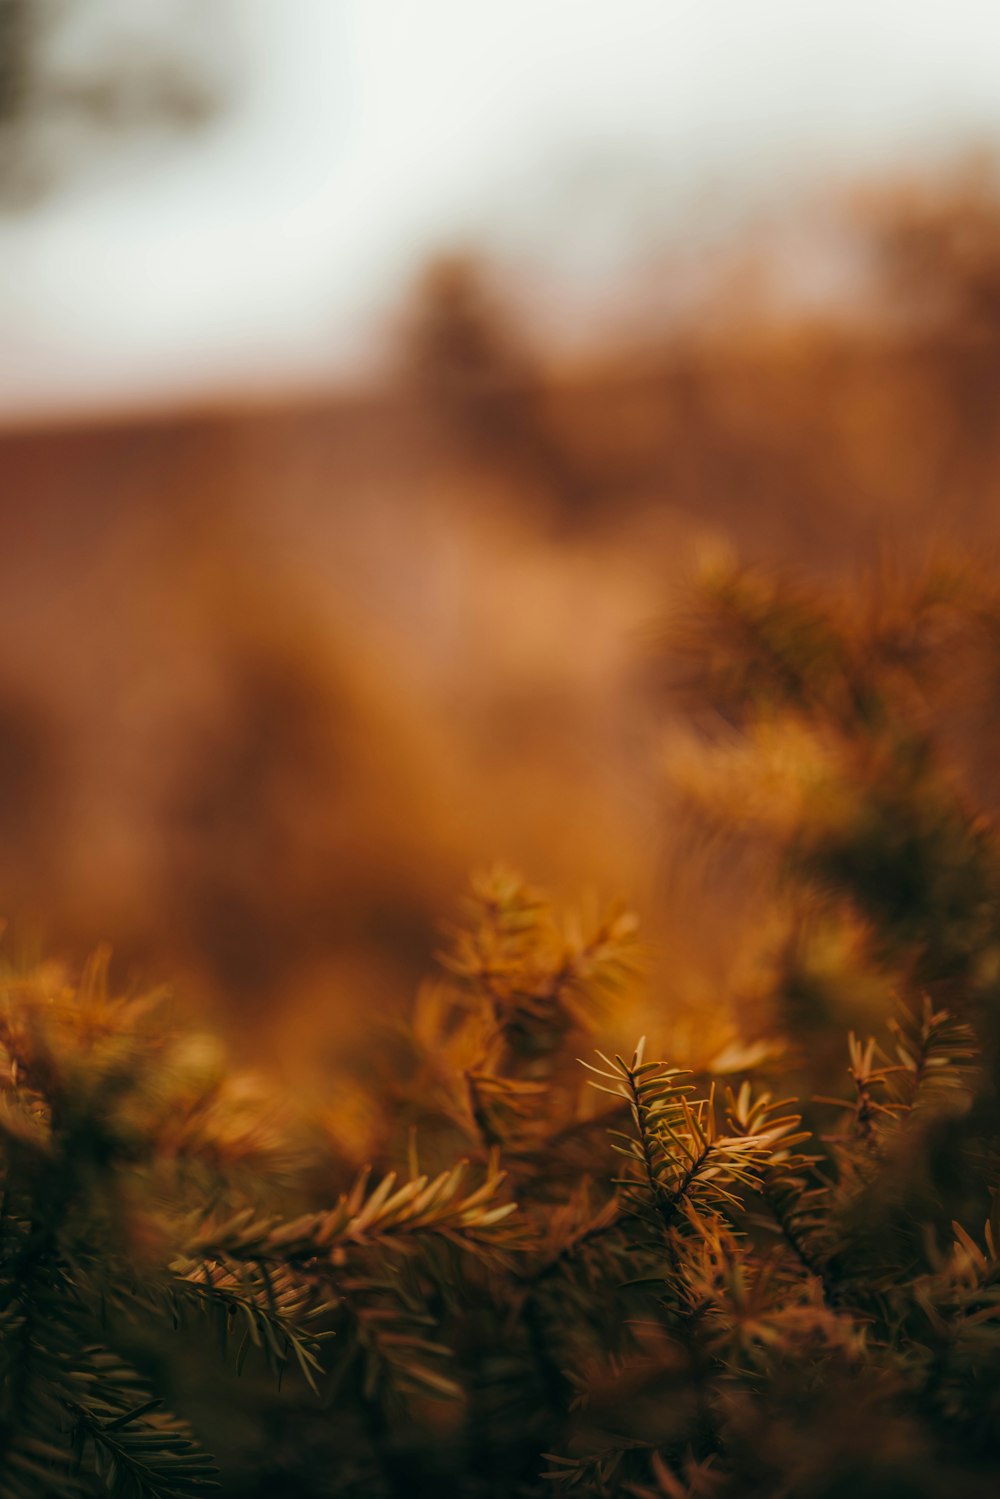 a blurry photo of a pine tree